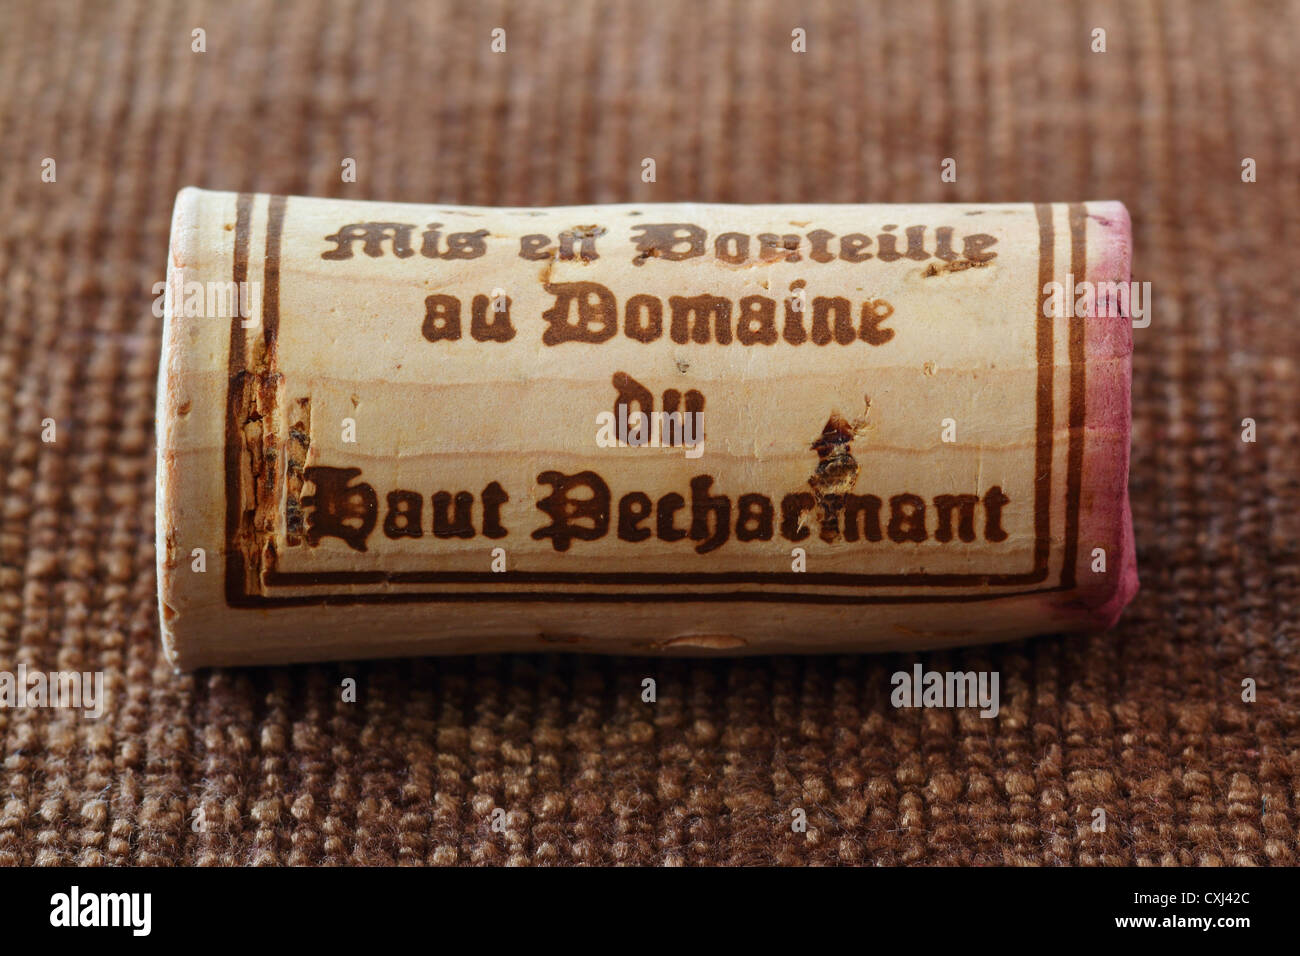 Apellation Pecharmant dry red wine cork stopper Stock Photo